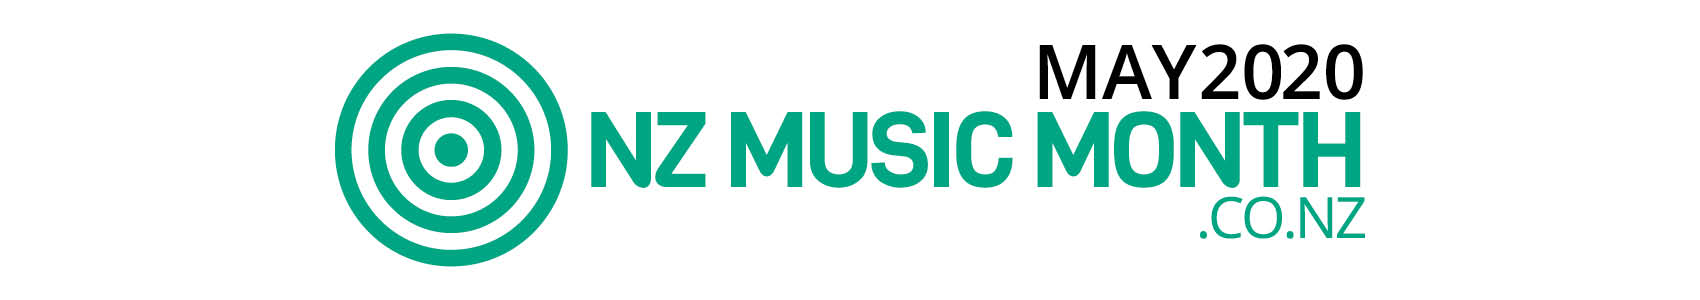 NZ Music Month 2020